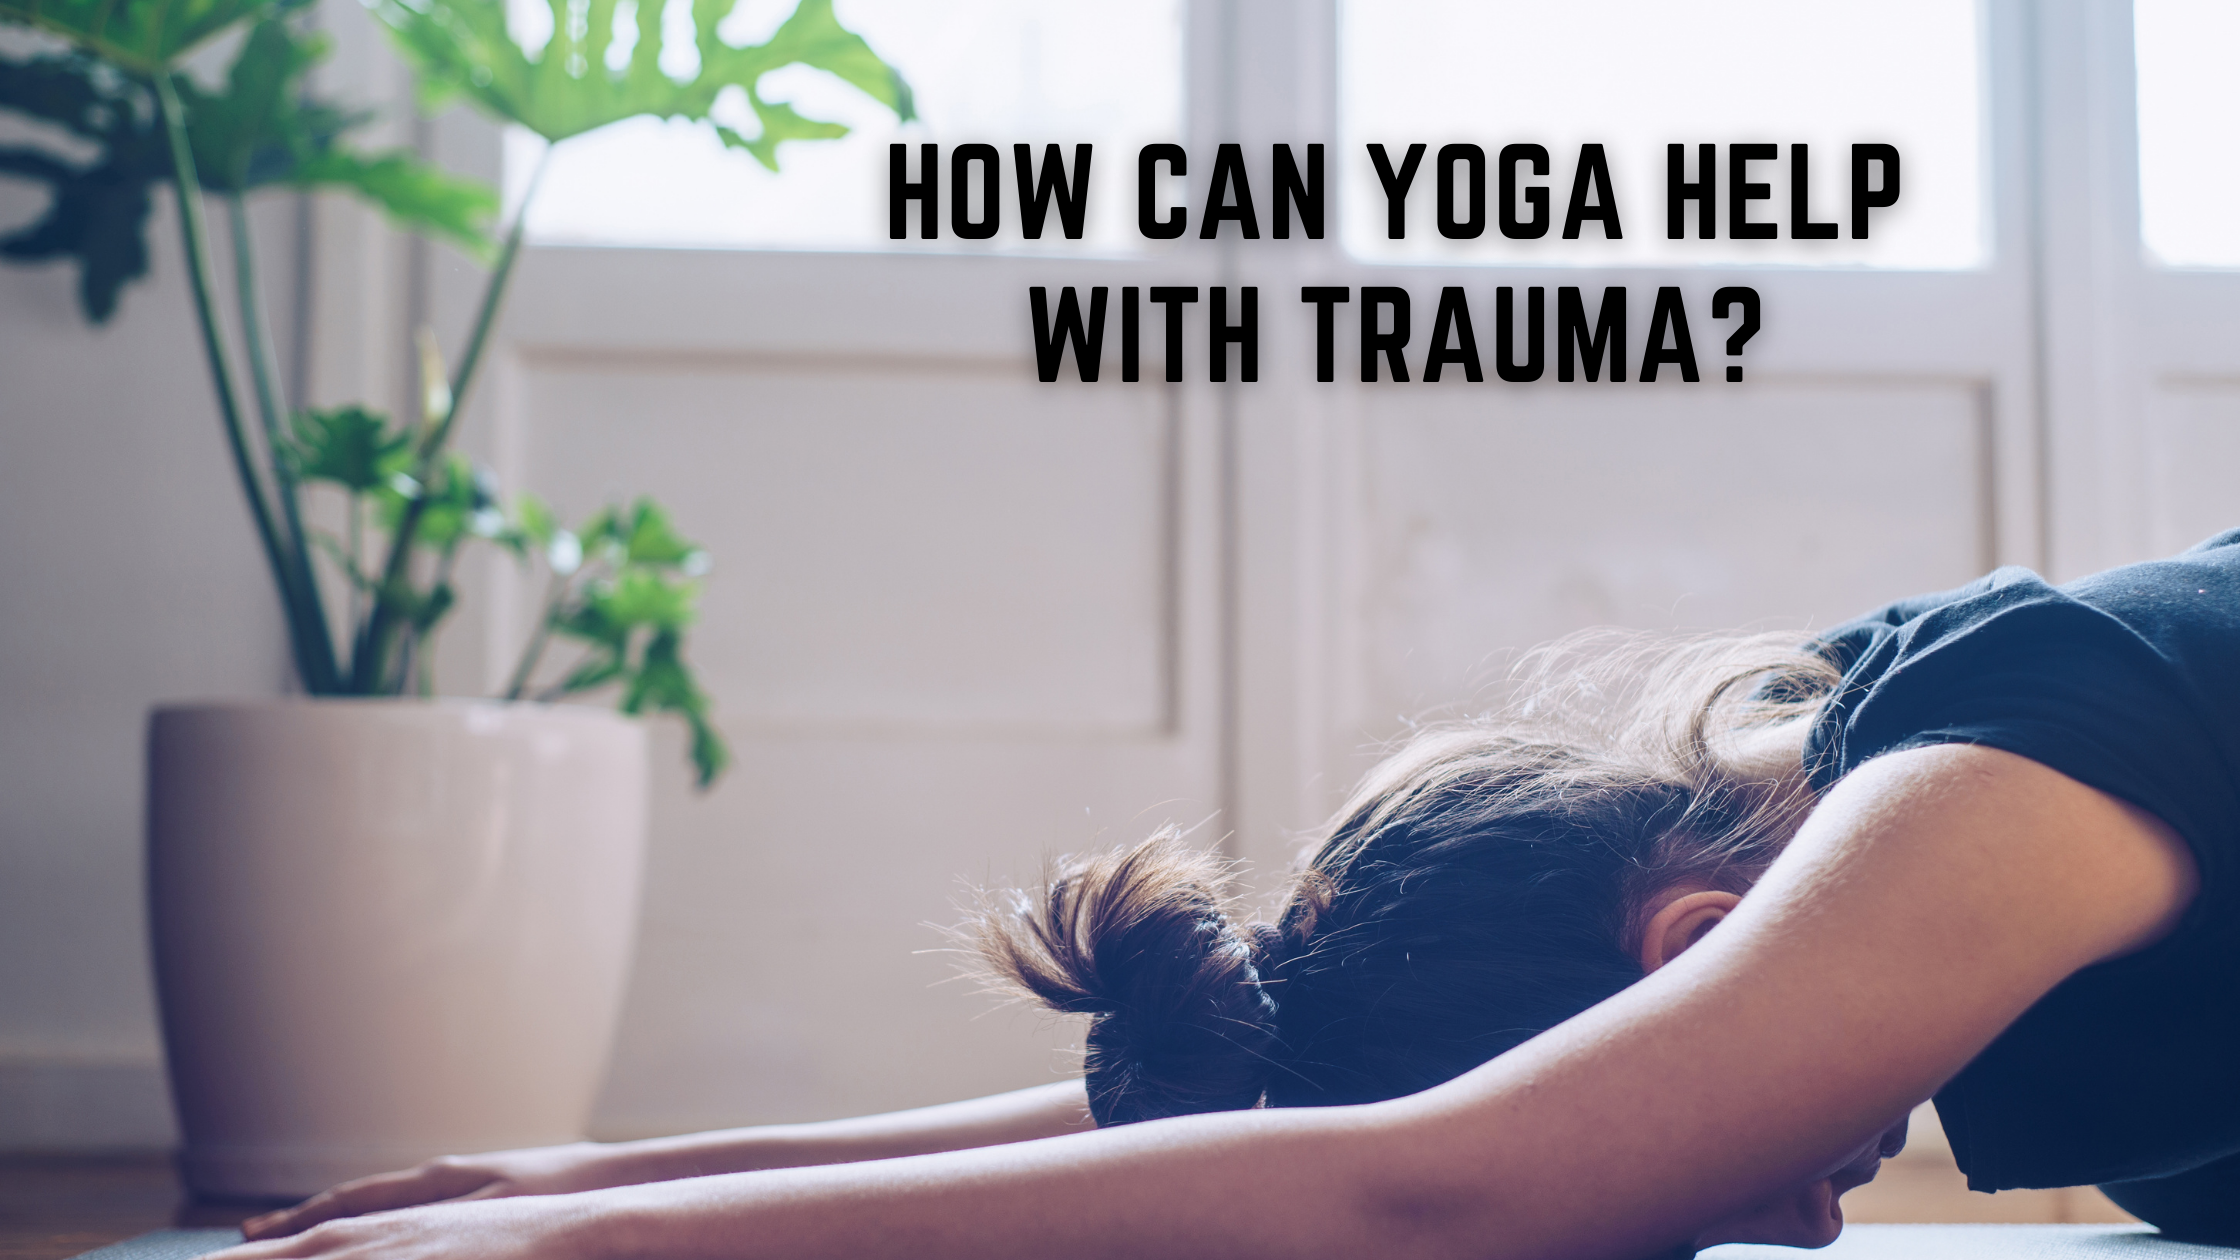 How can yoga help with trauma